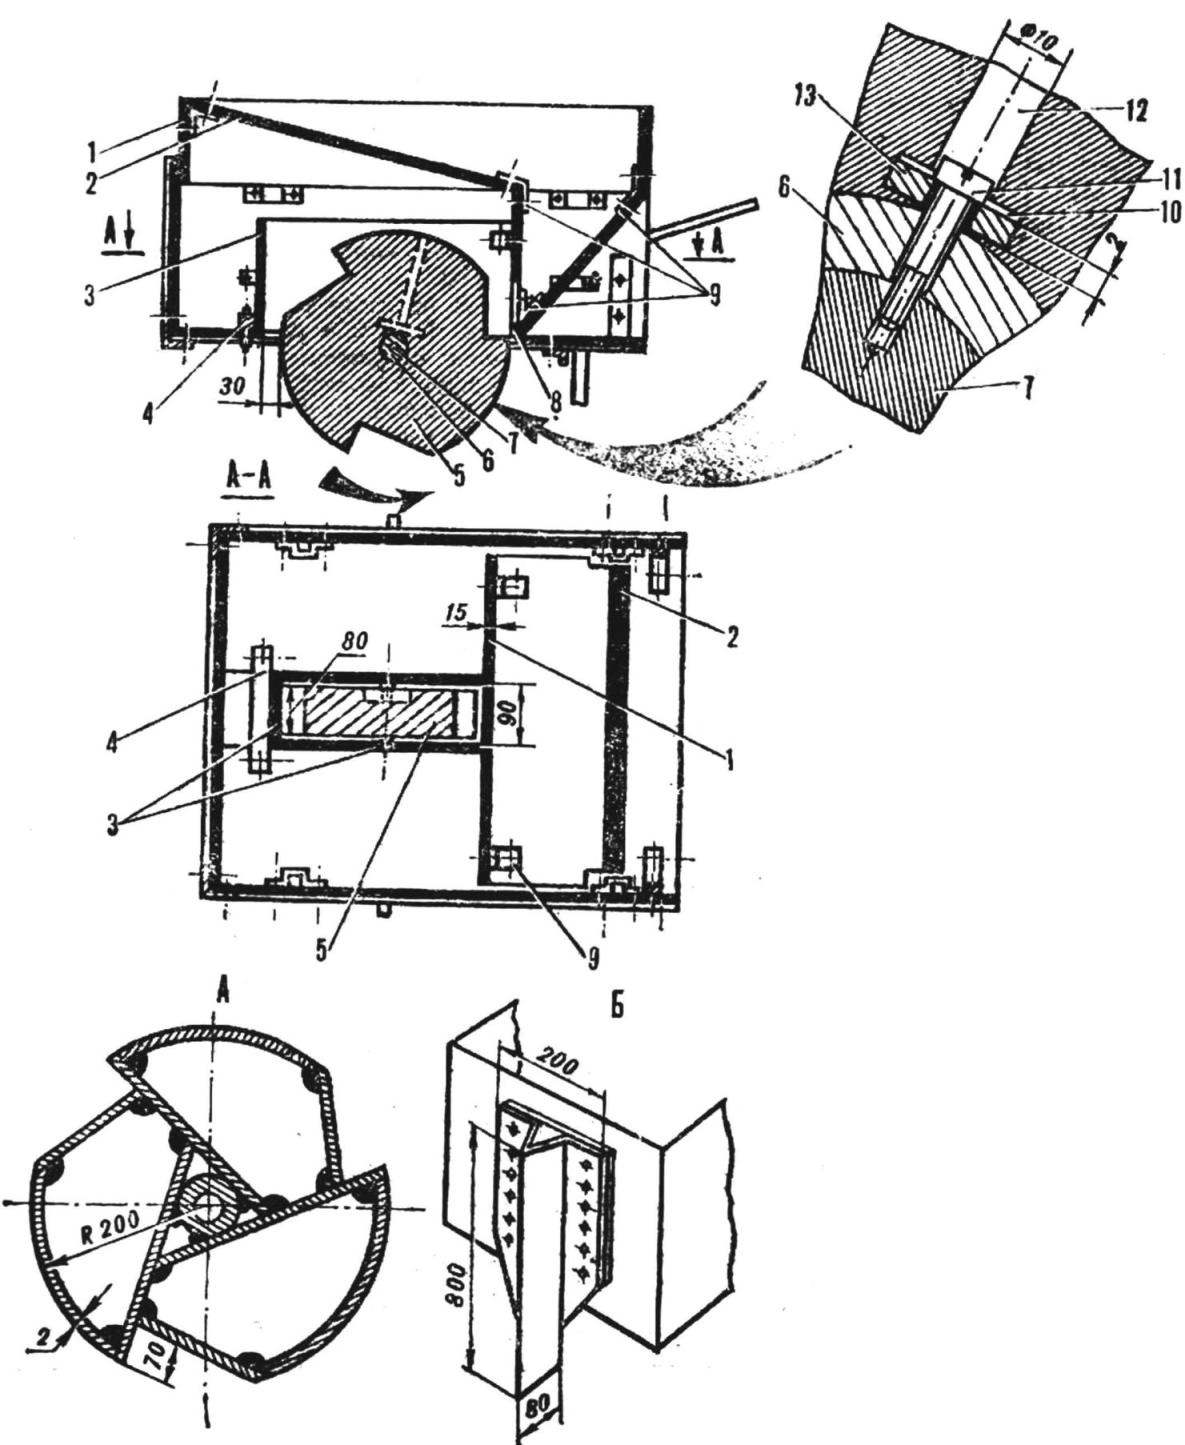 Fig. 2. Cart-planter